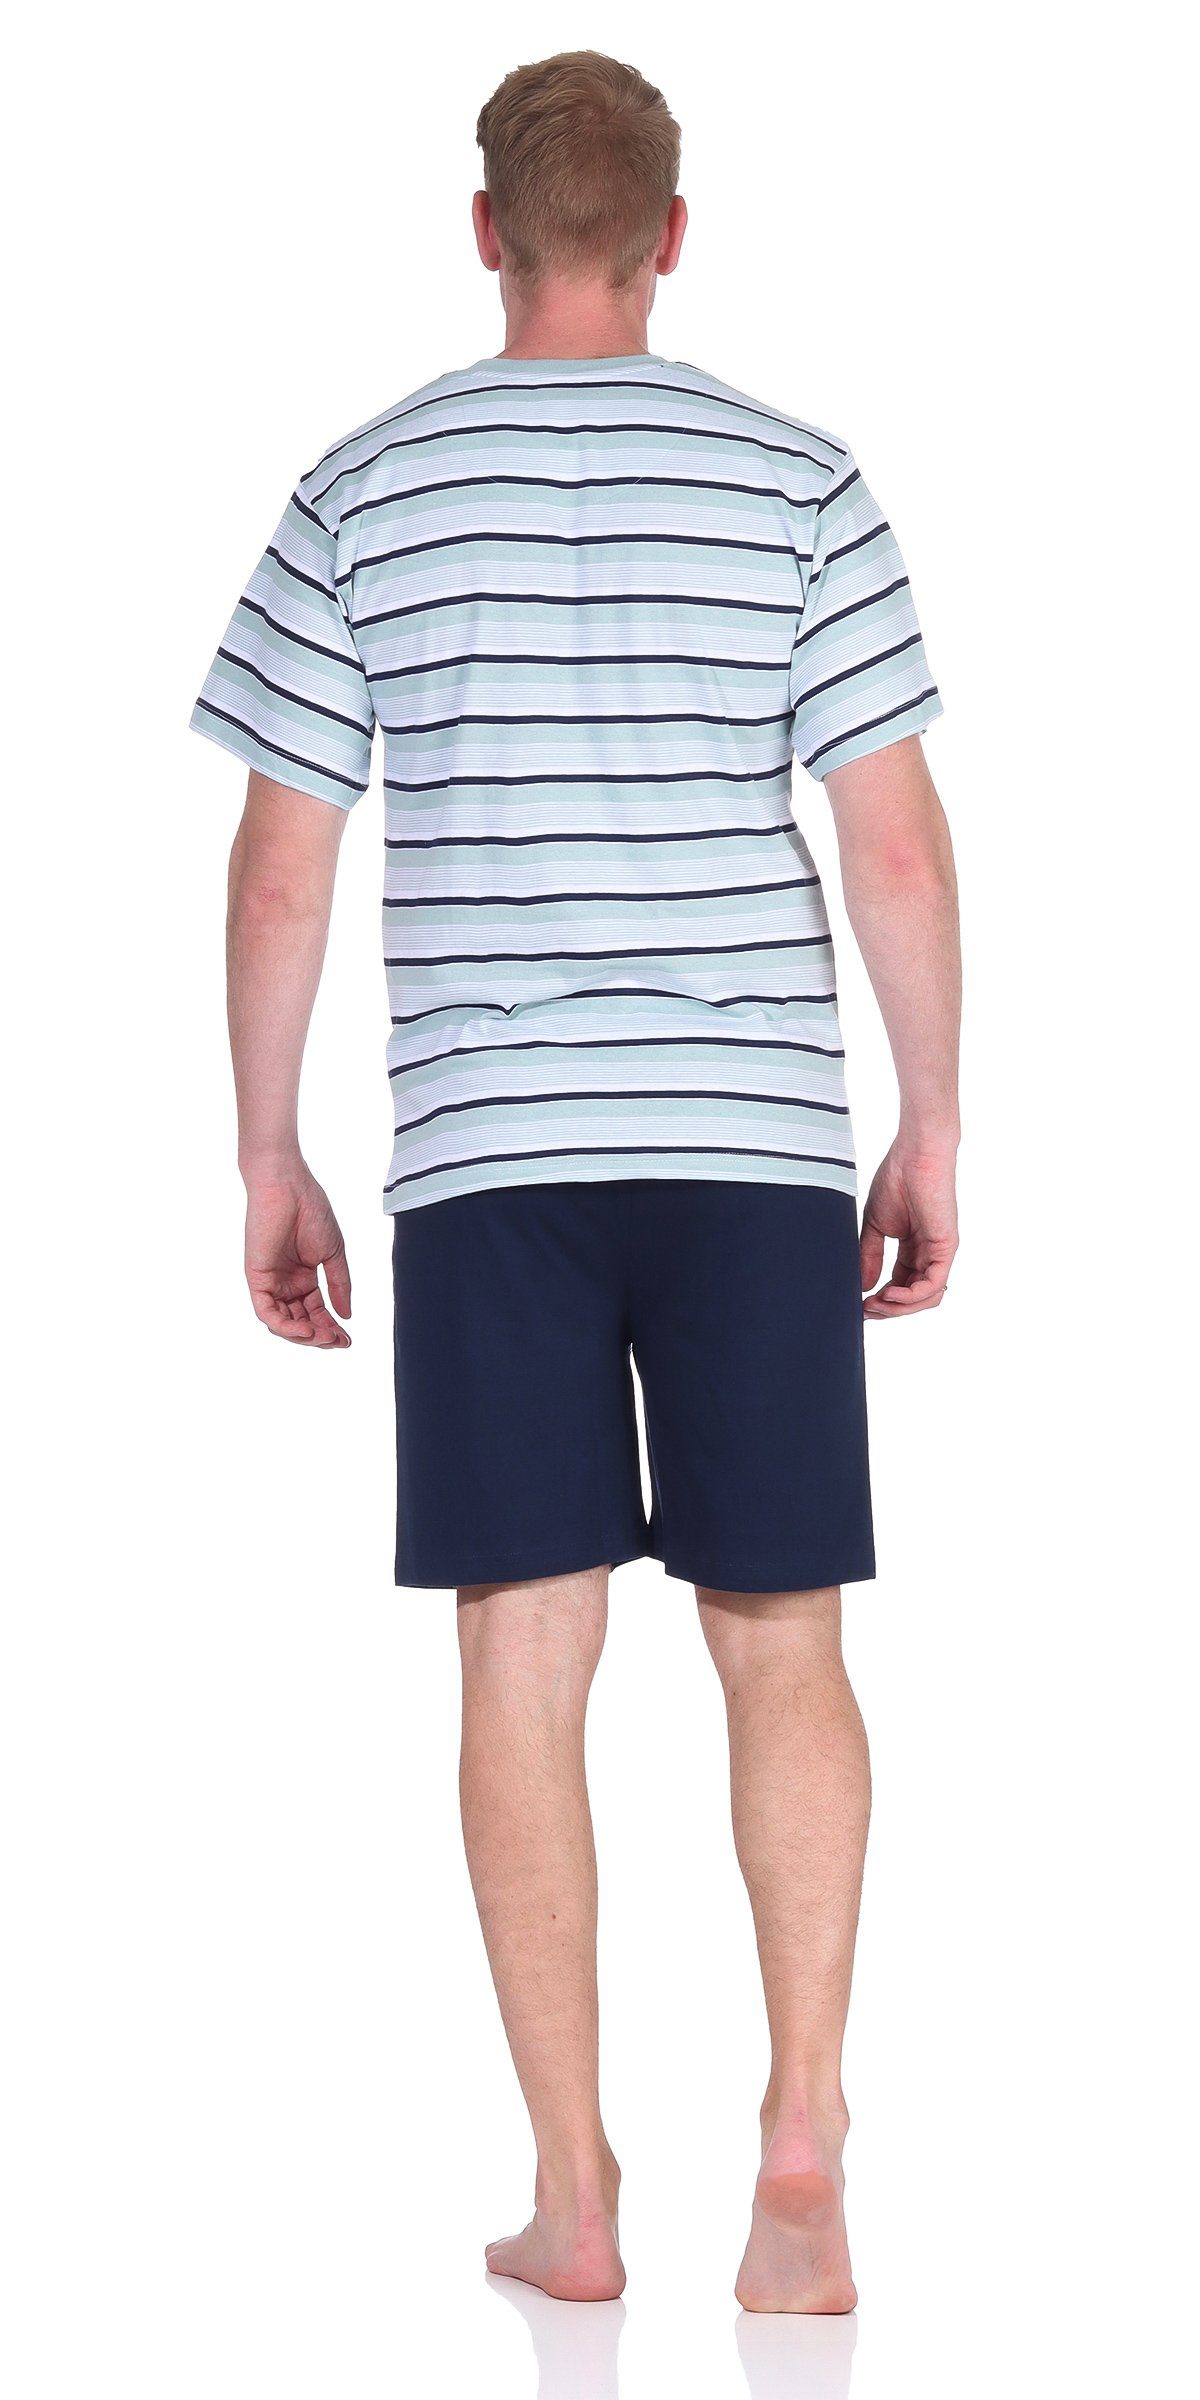 Moonline Shorty Herren Shorty mit V-Ausschnitt 100% Baumwolle Single-Jersey Kurzarm Schlafanzug Aqua